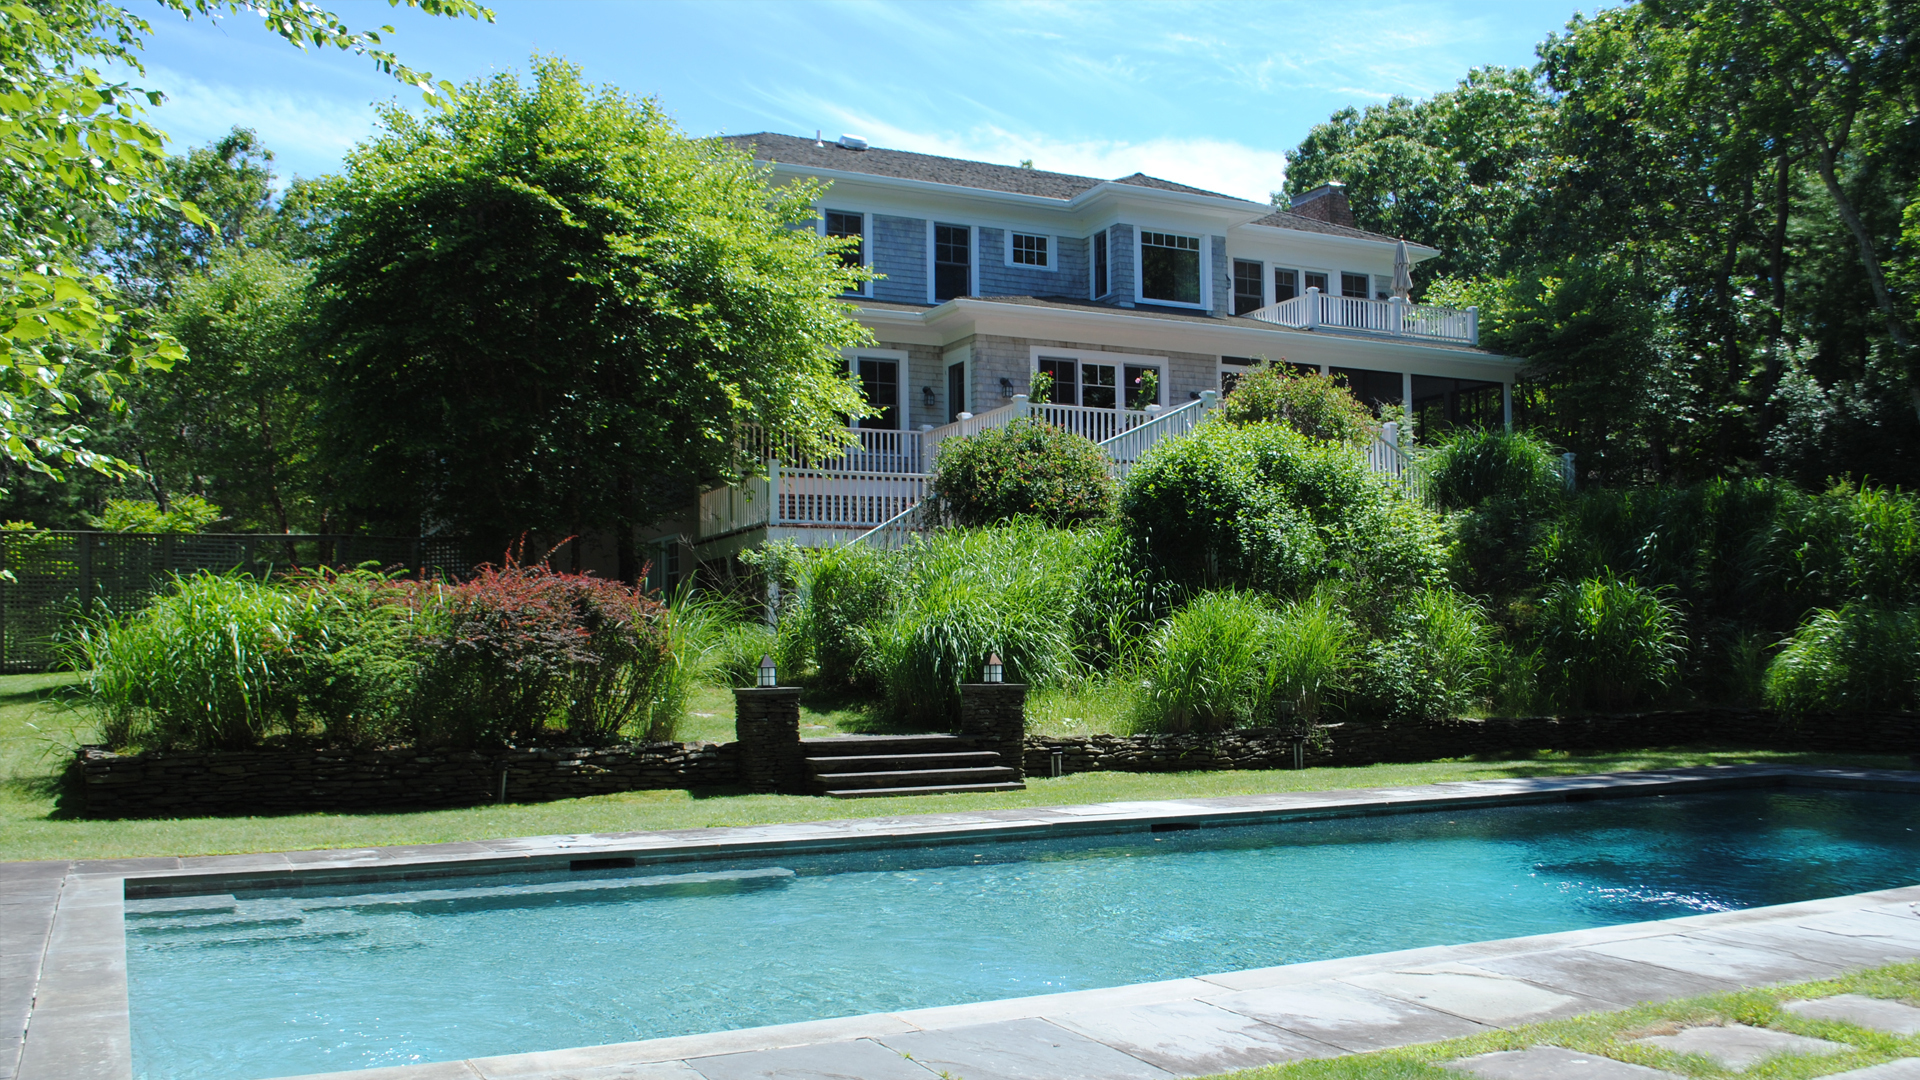 Rental Property at East Hampton, East Hampton, Hamptons, NY - Bedrooms: 4 
Bathrooms: 4  - $55,000 MO.